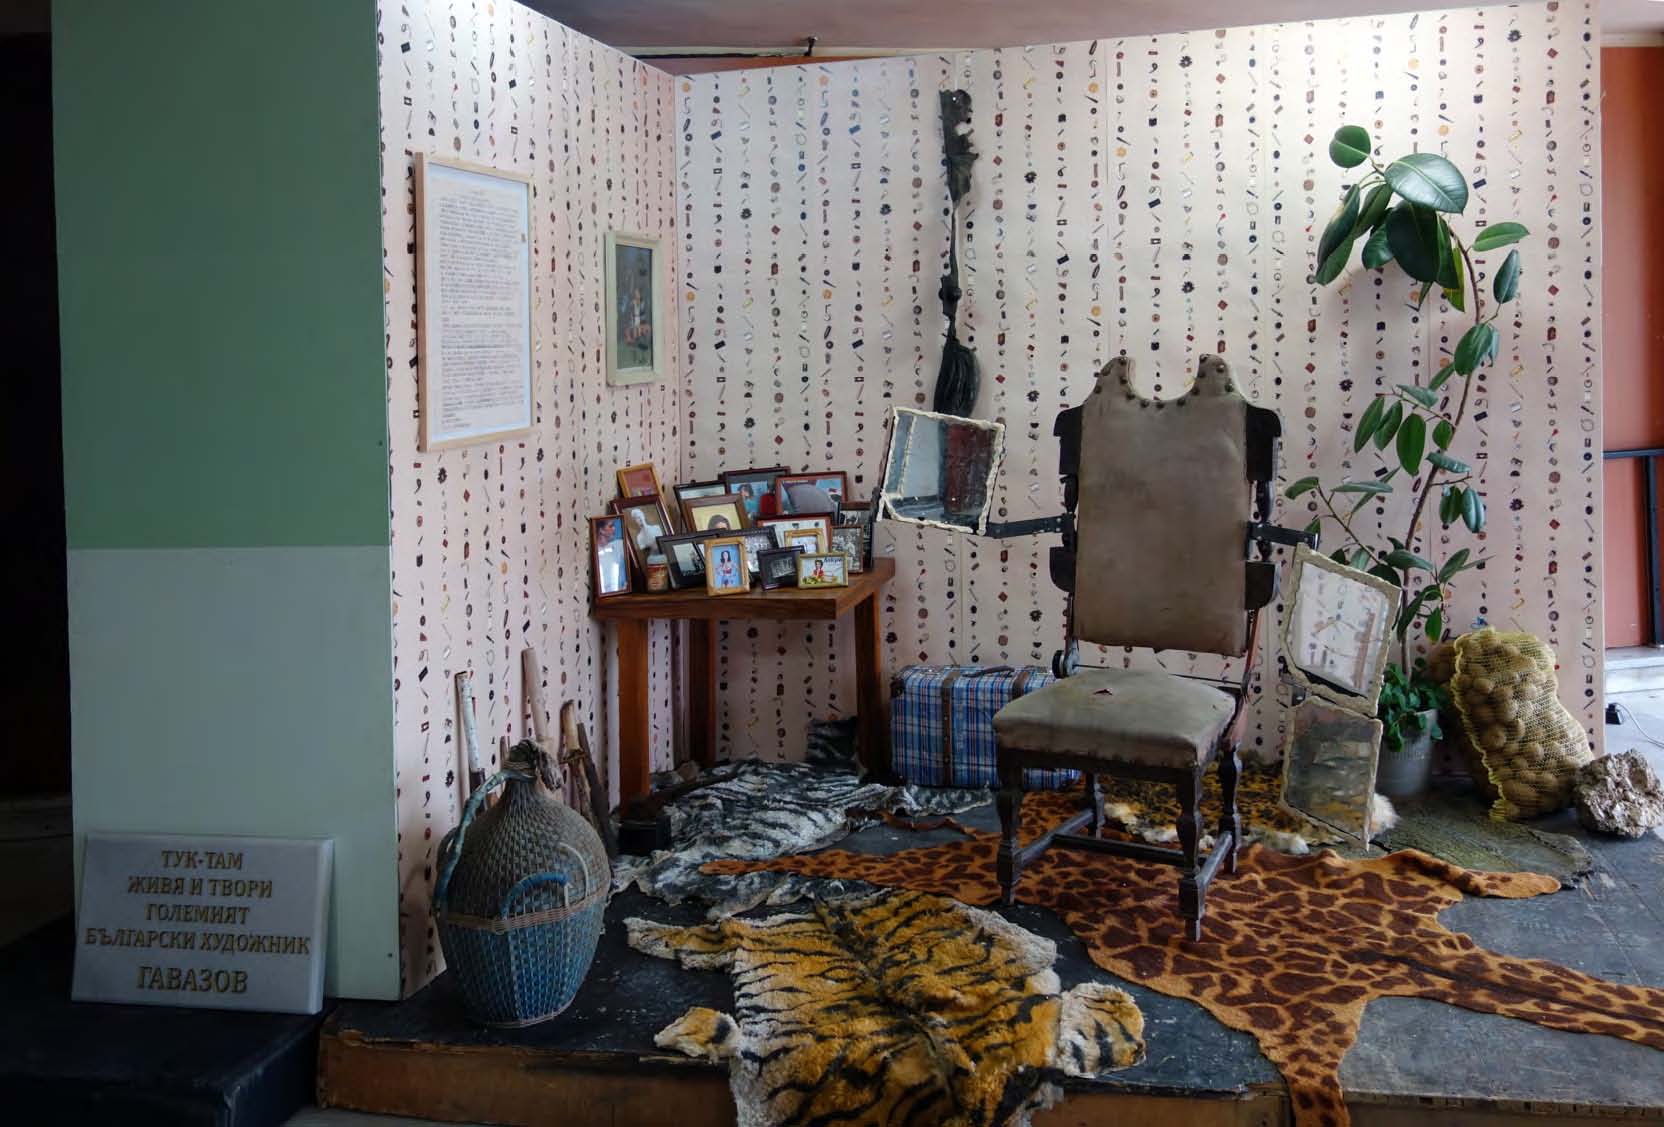 Gavazov’s Room, 2012